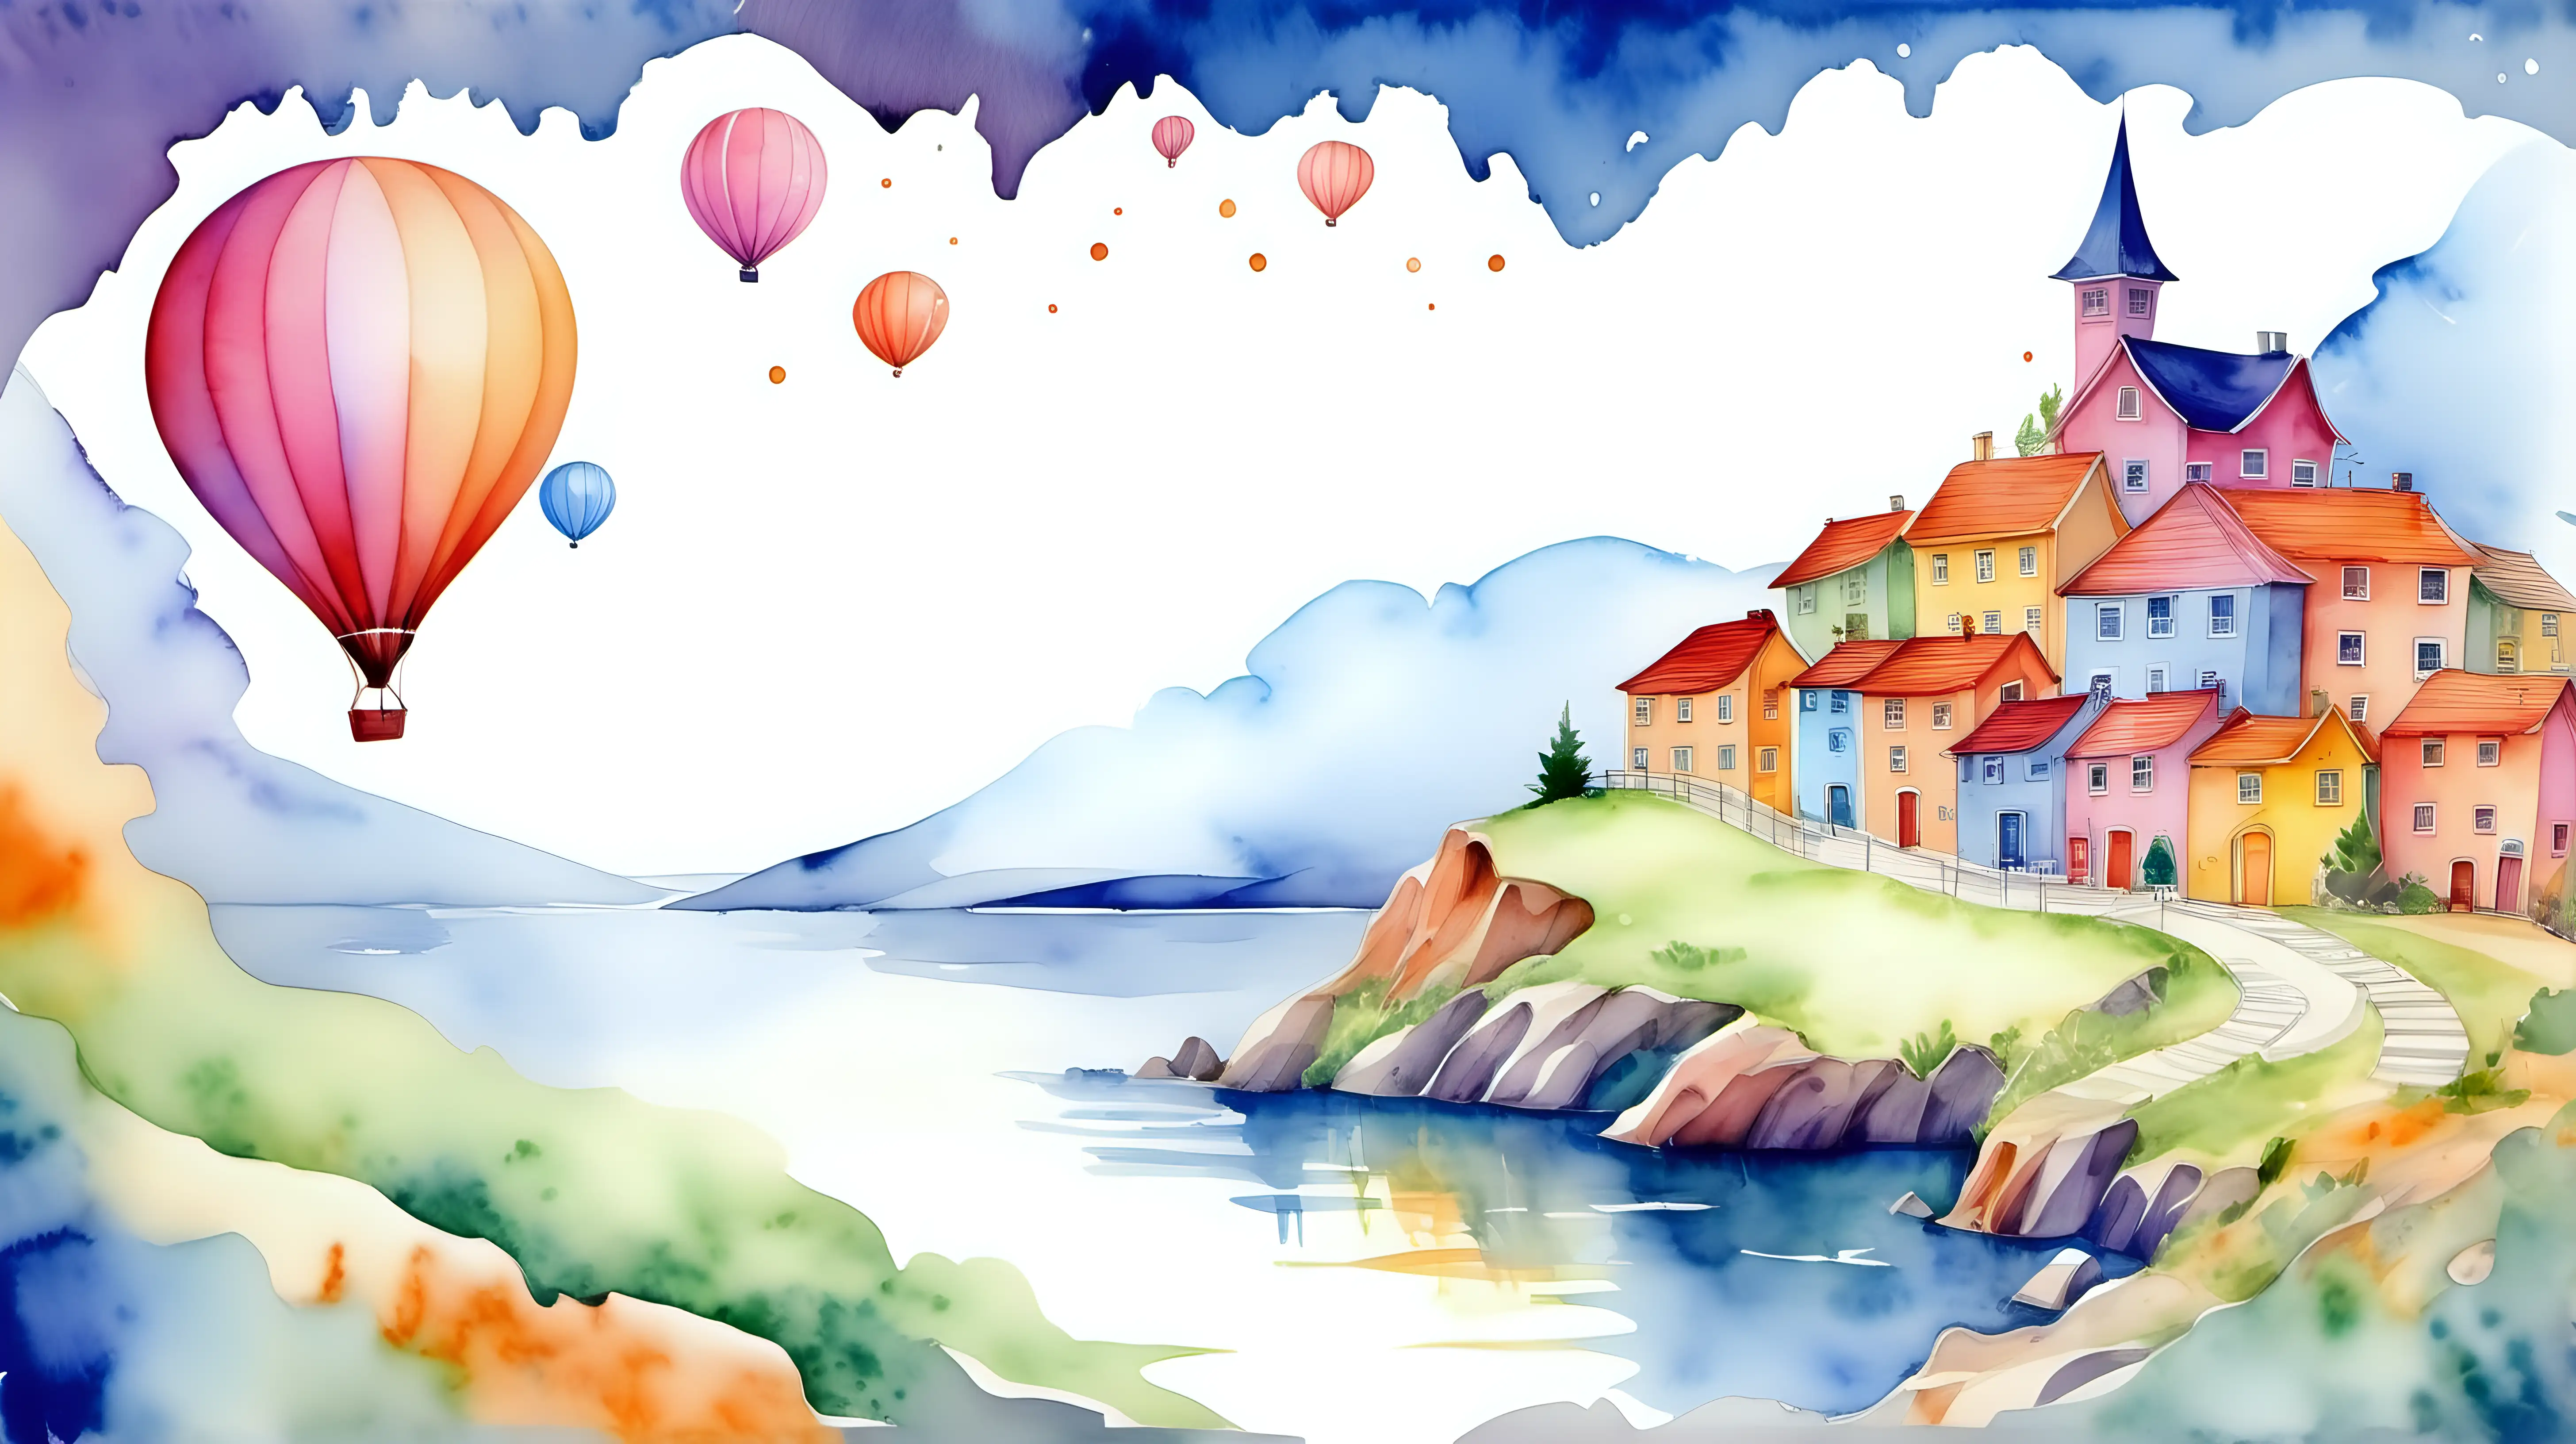 Enchanting Dreamland in Vibrant Watercolors